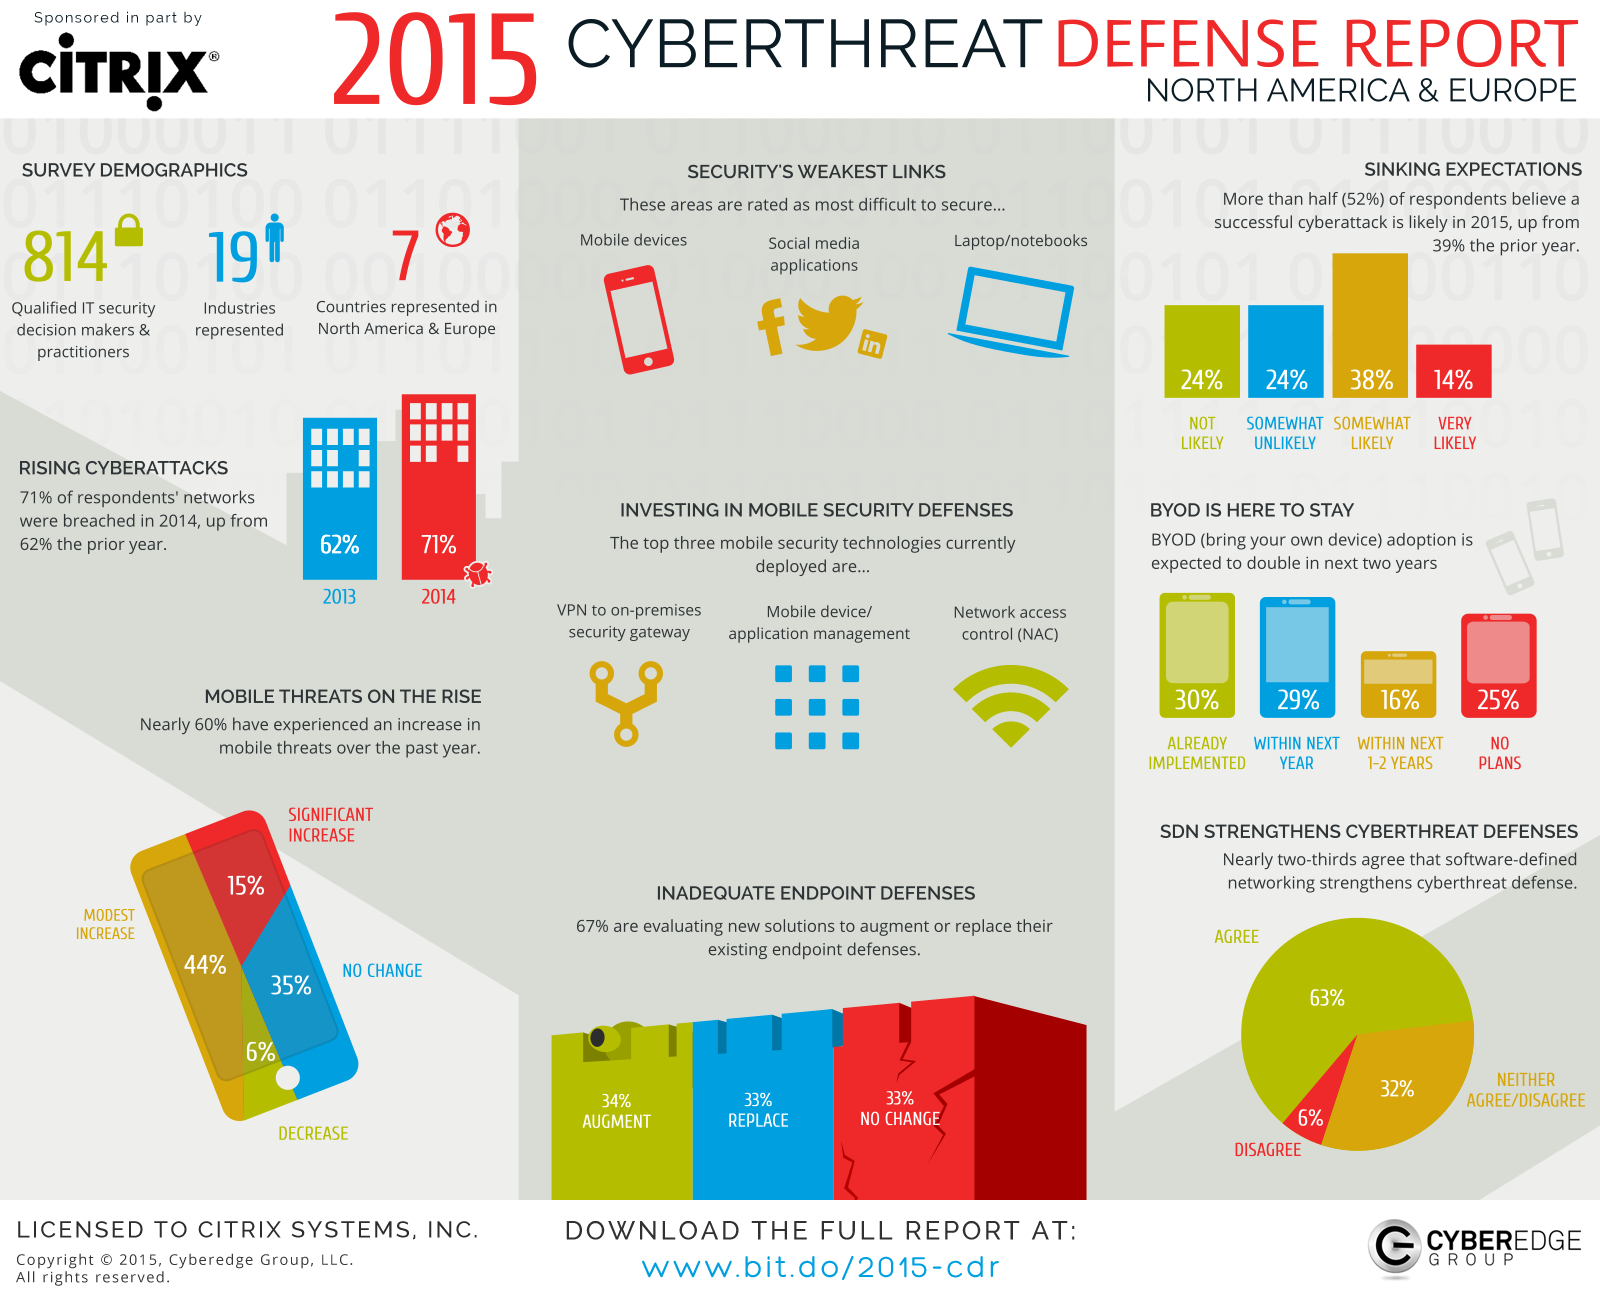 Presentation image for Citrix 2015 Cyberthreat Defense Report Infographic